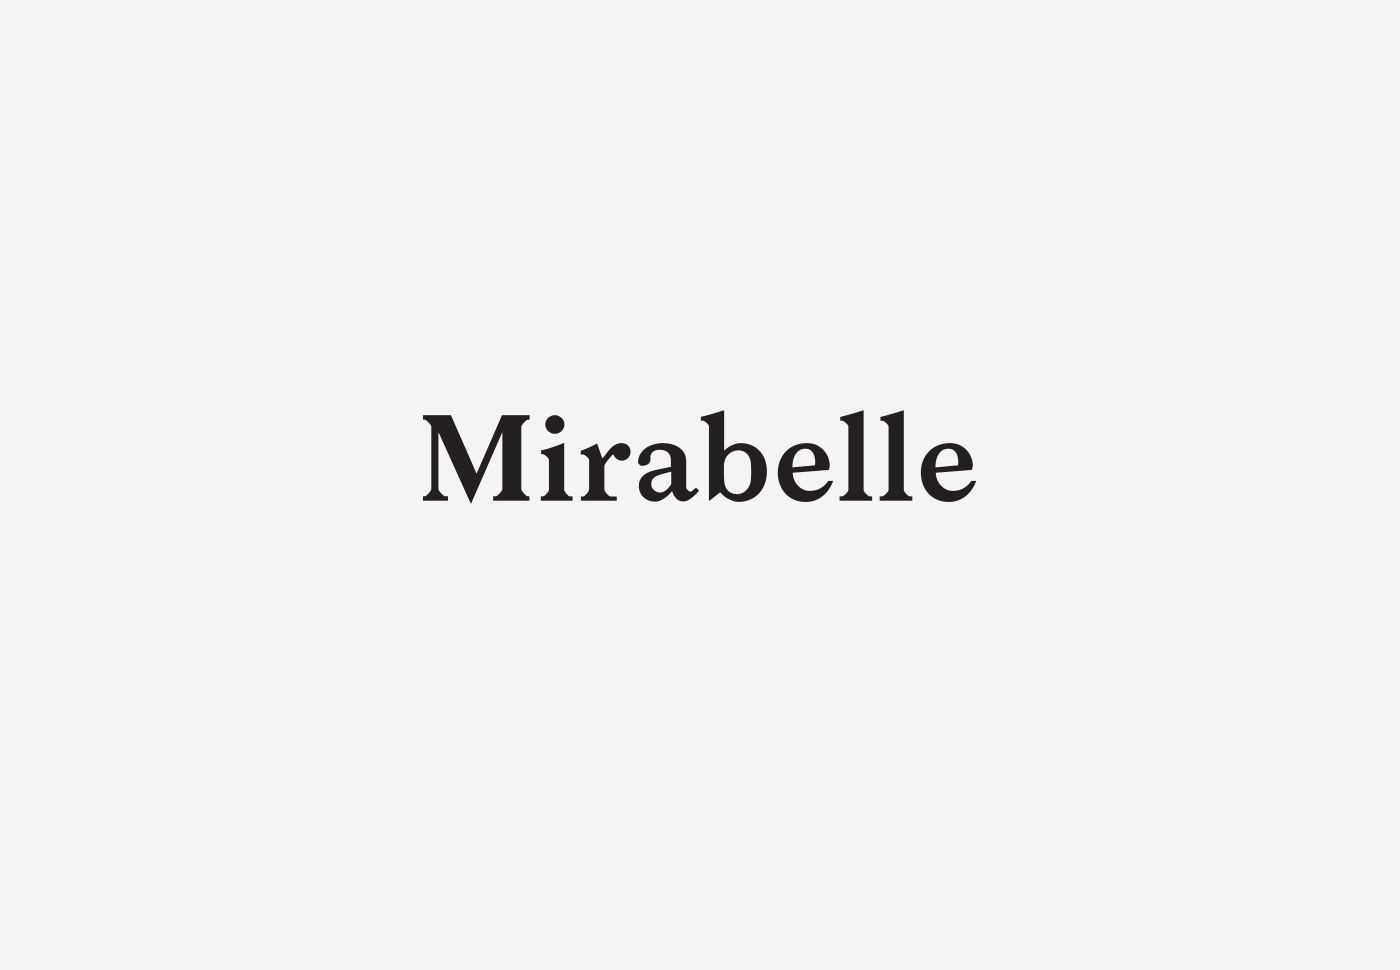 Mirabelle – Visual identity